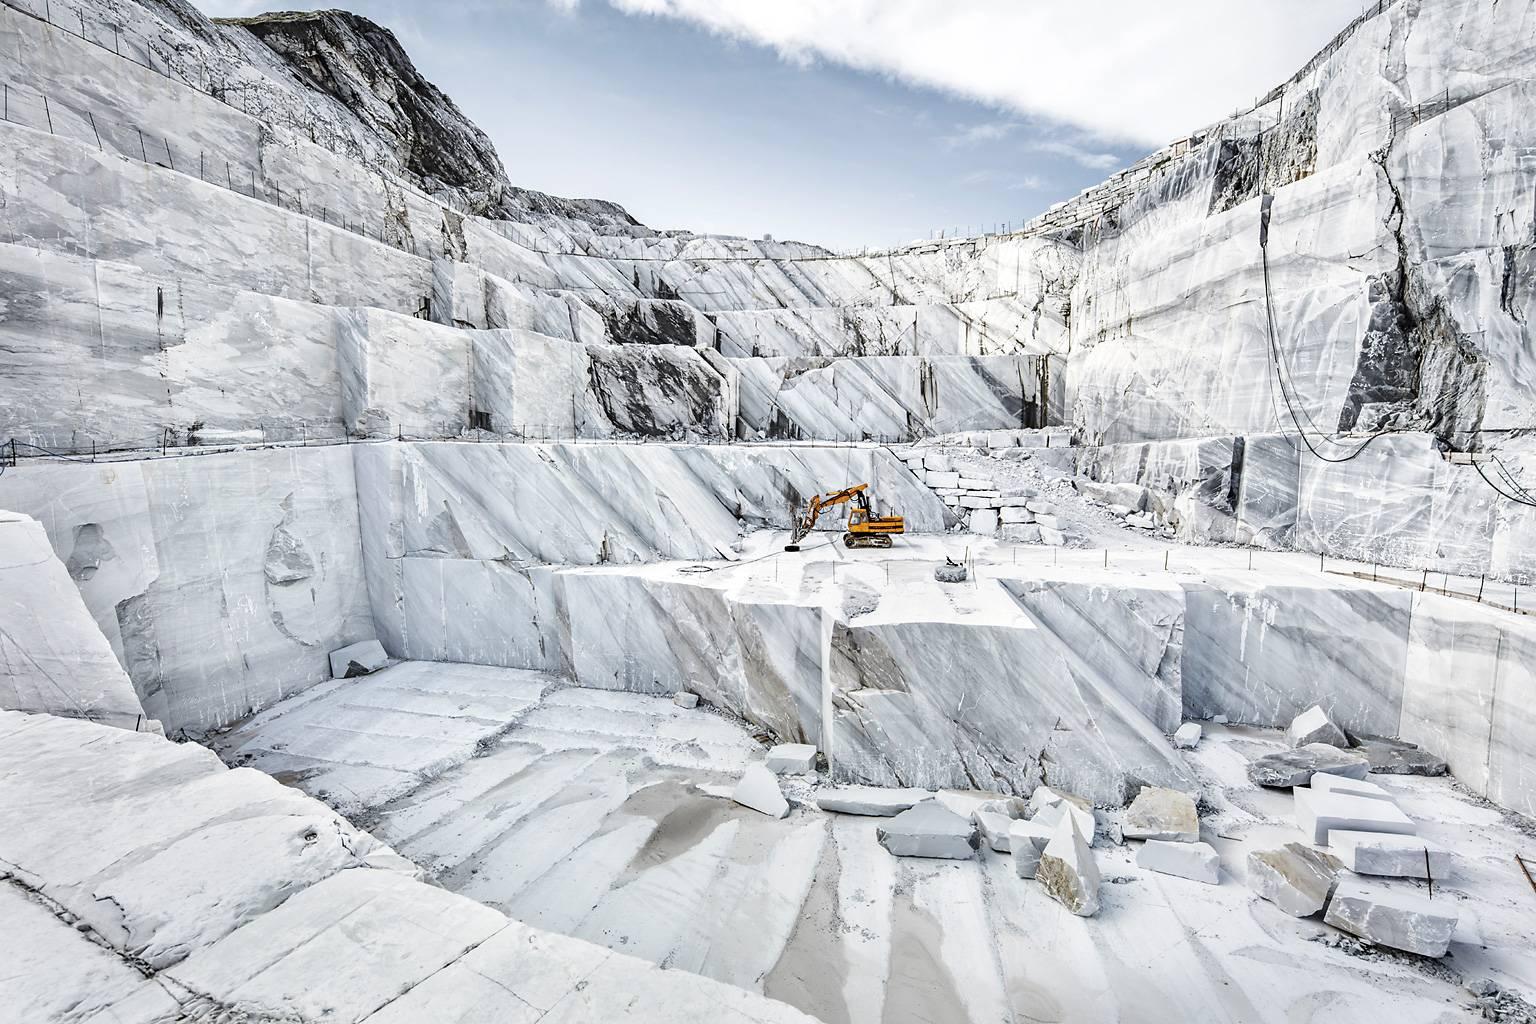 Marmo di Carrara - large format photograph of iconic Italian marble quarry